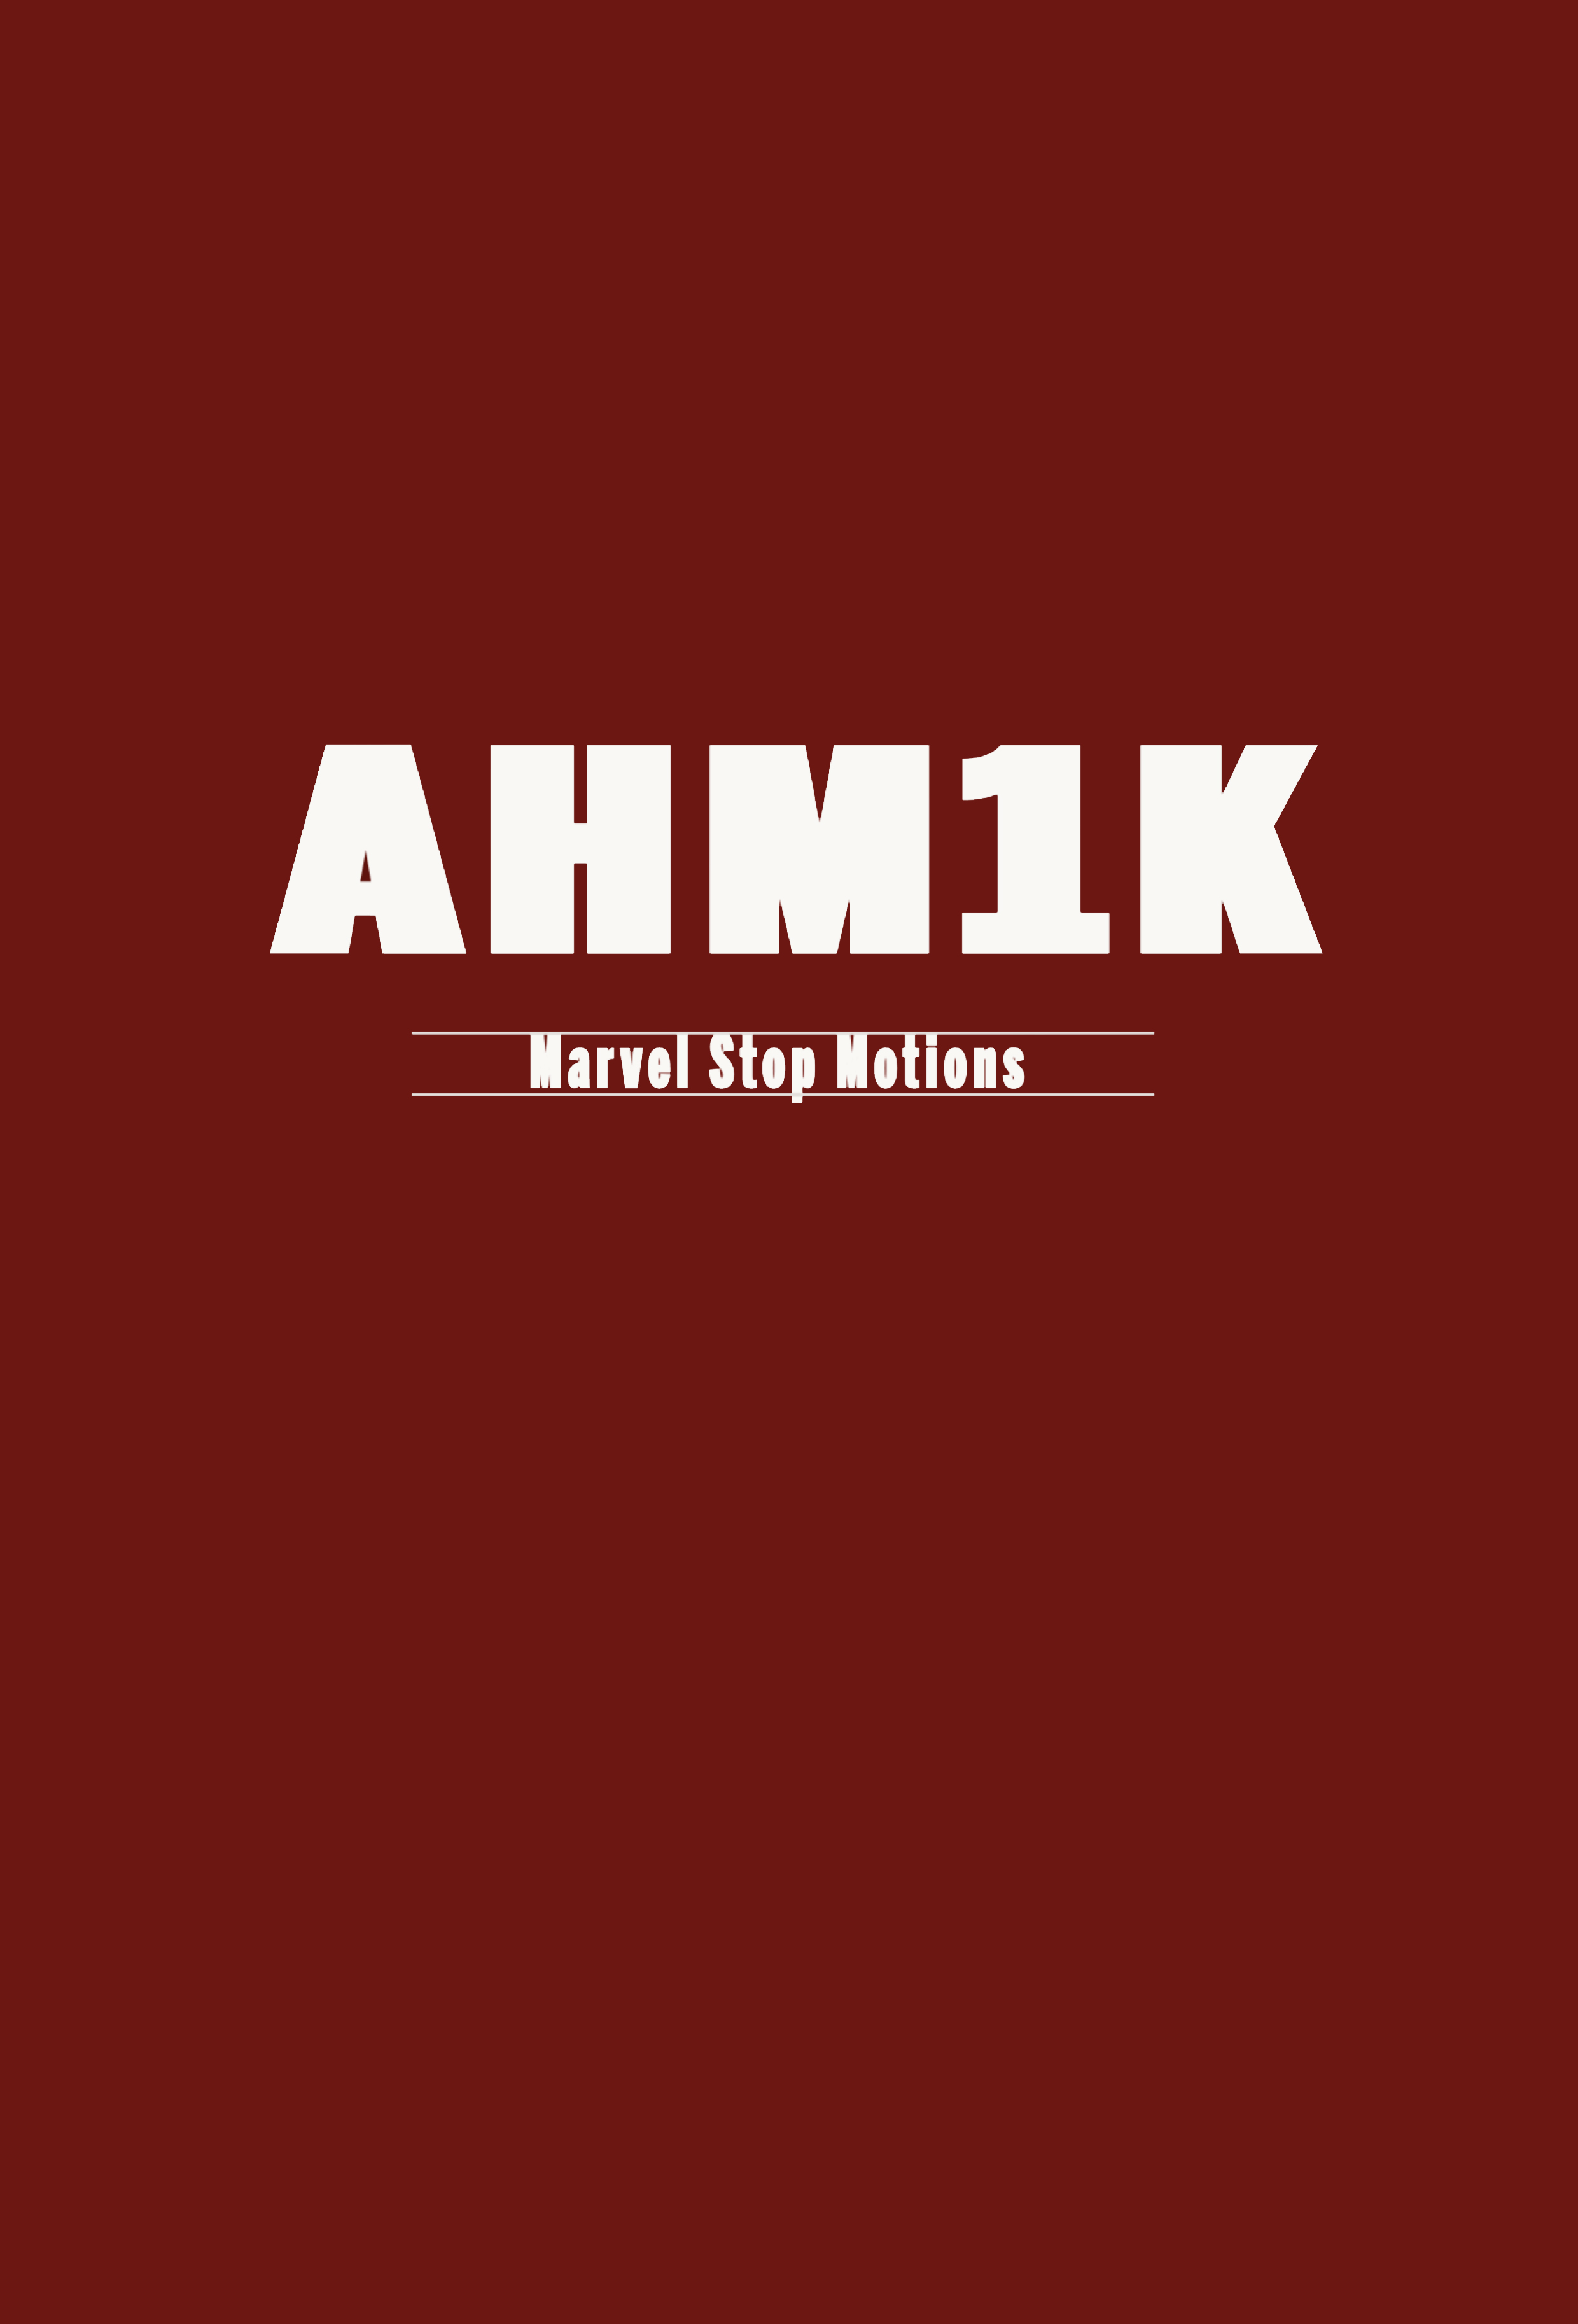 AHM1K Marvel Stop Motion Universe